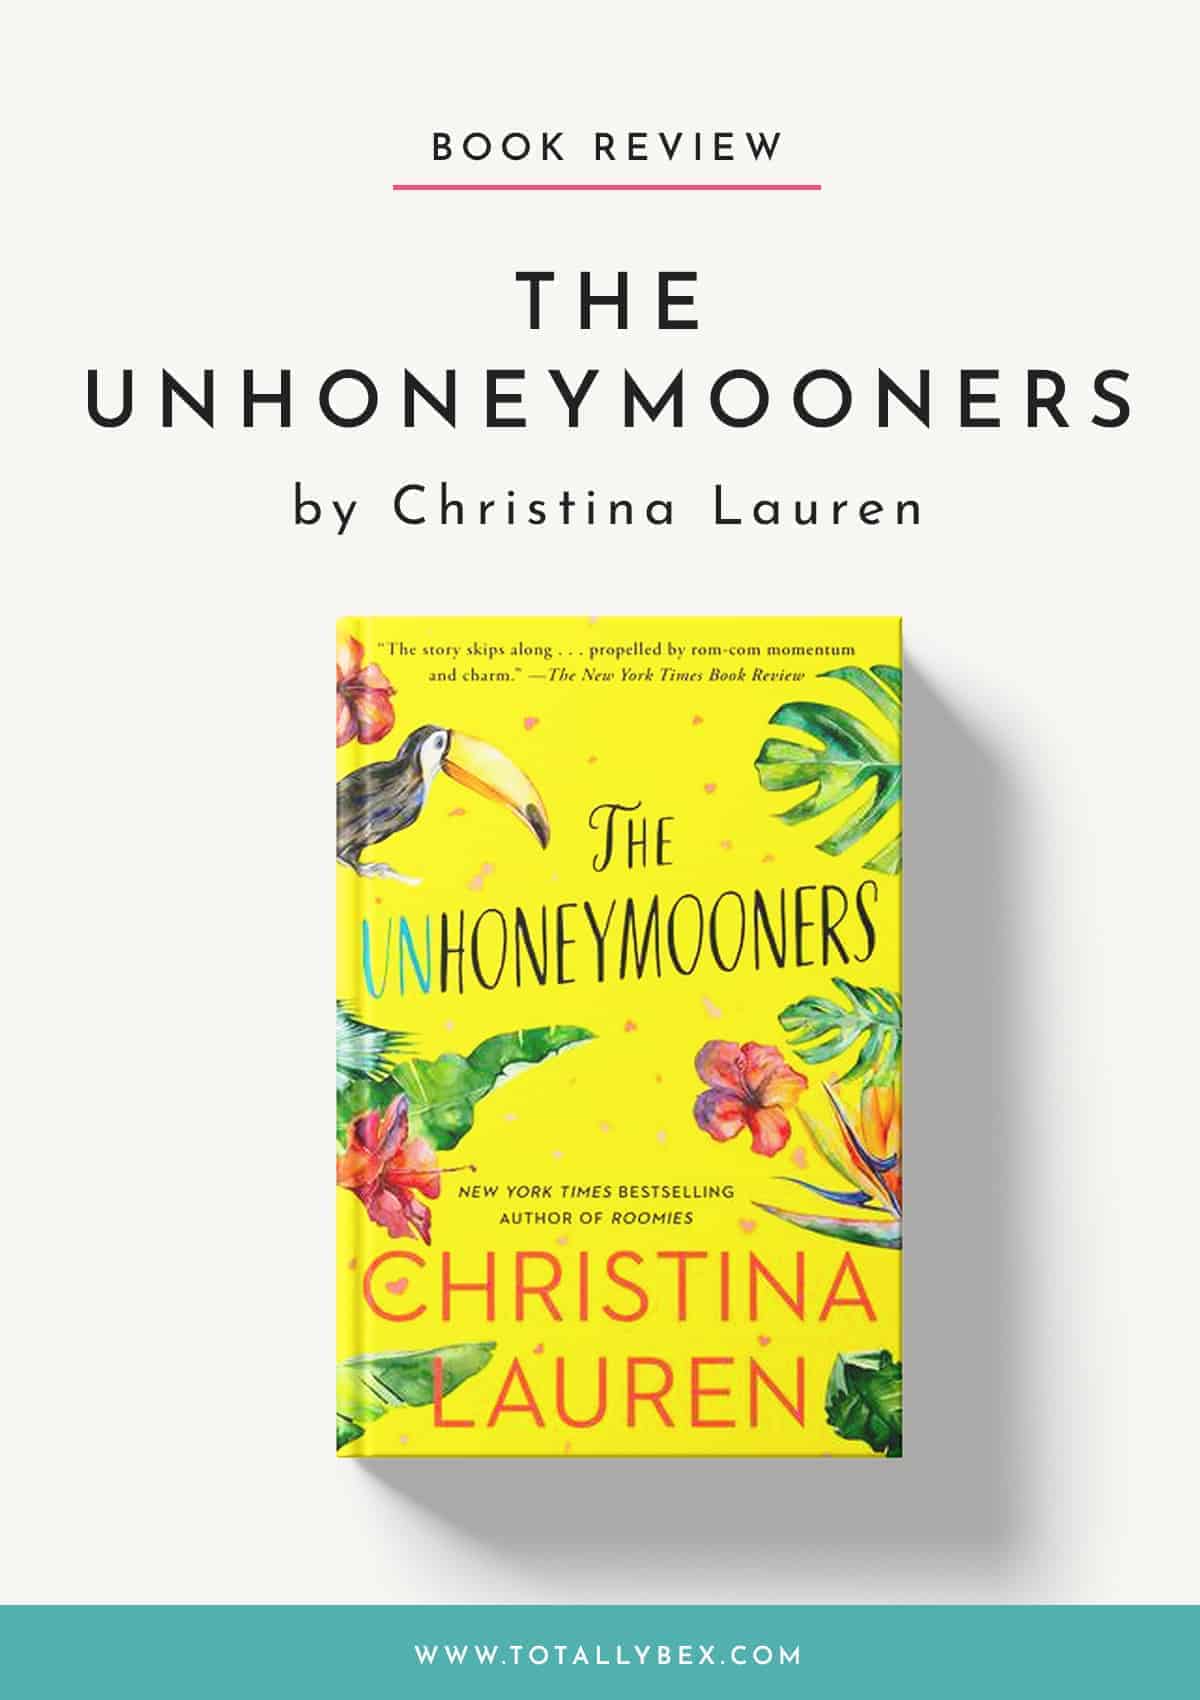 The Unhoneymooners by Christina Lauren-Book Review